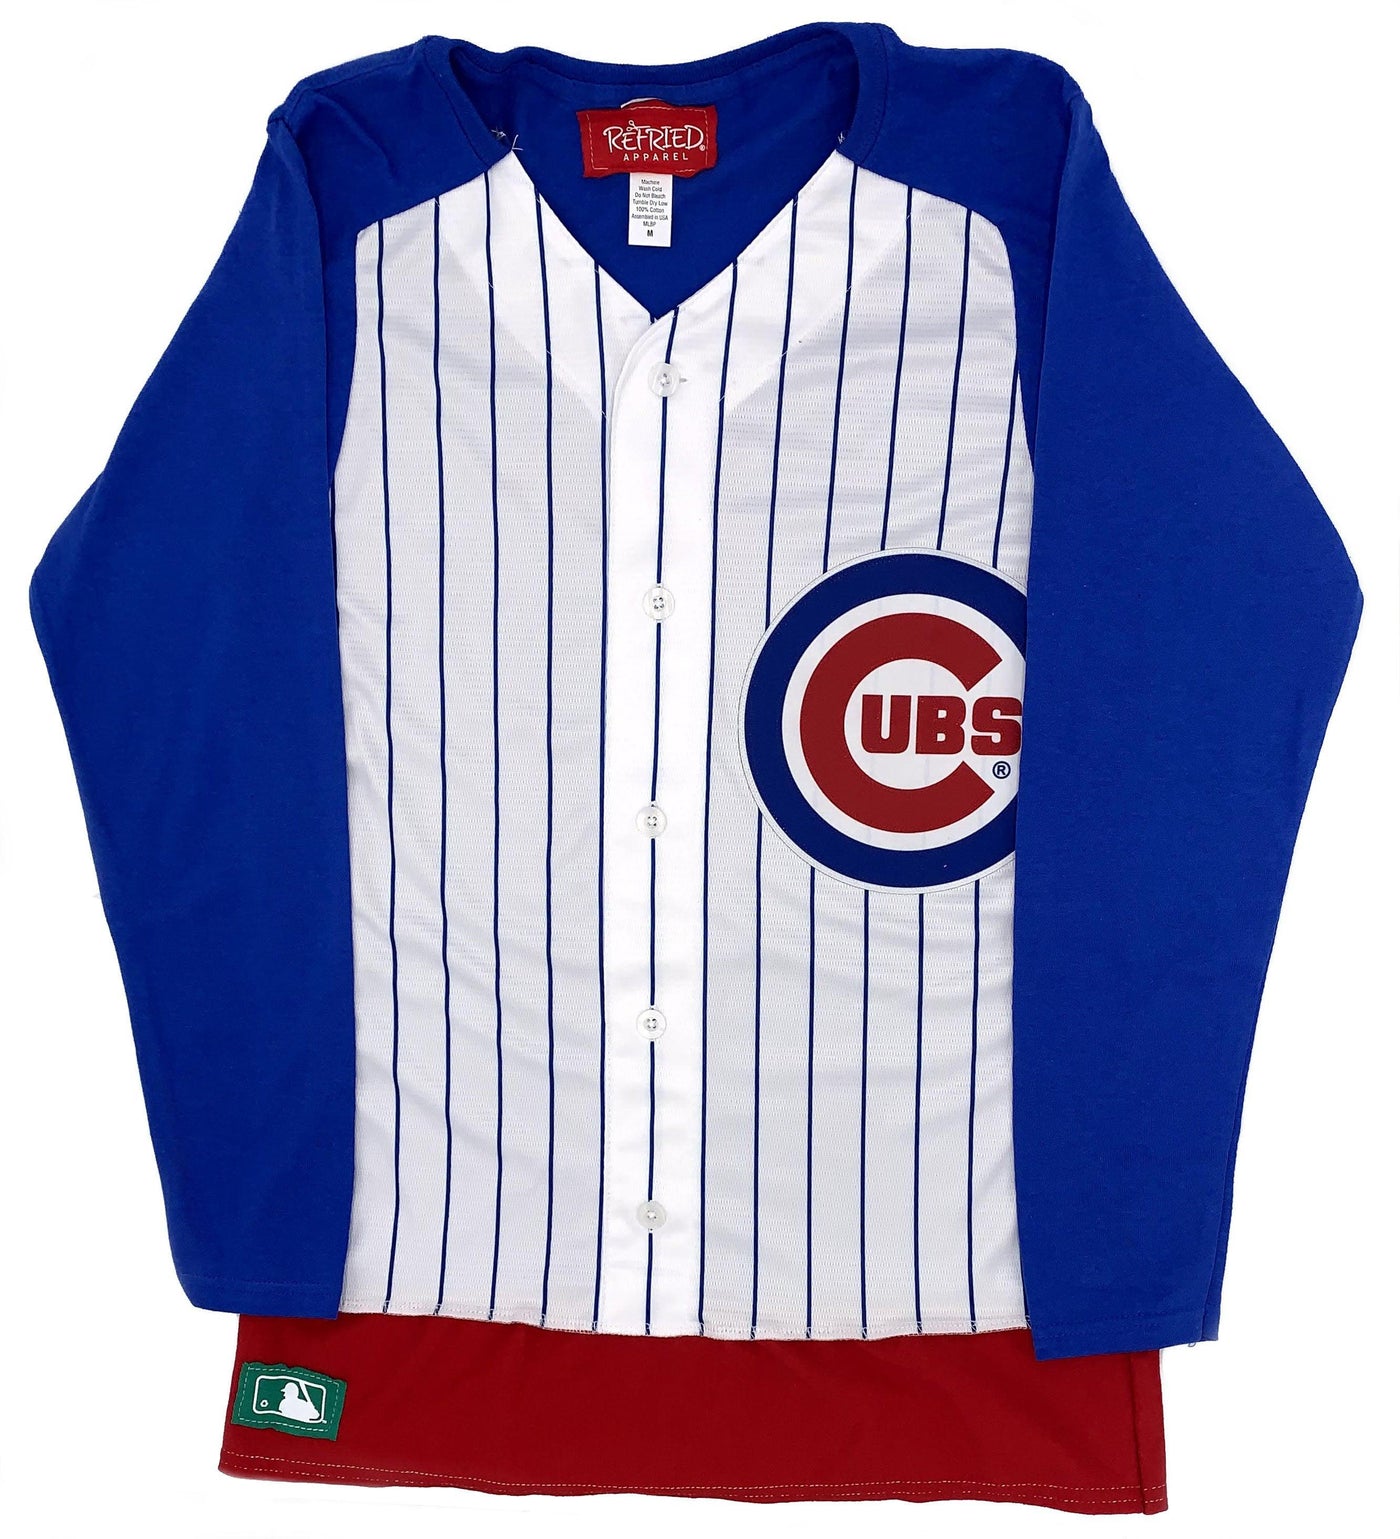 cubs baseball jersey number